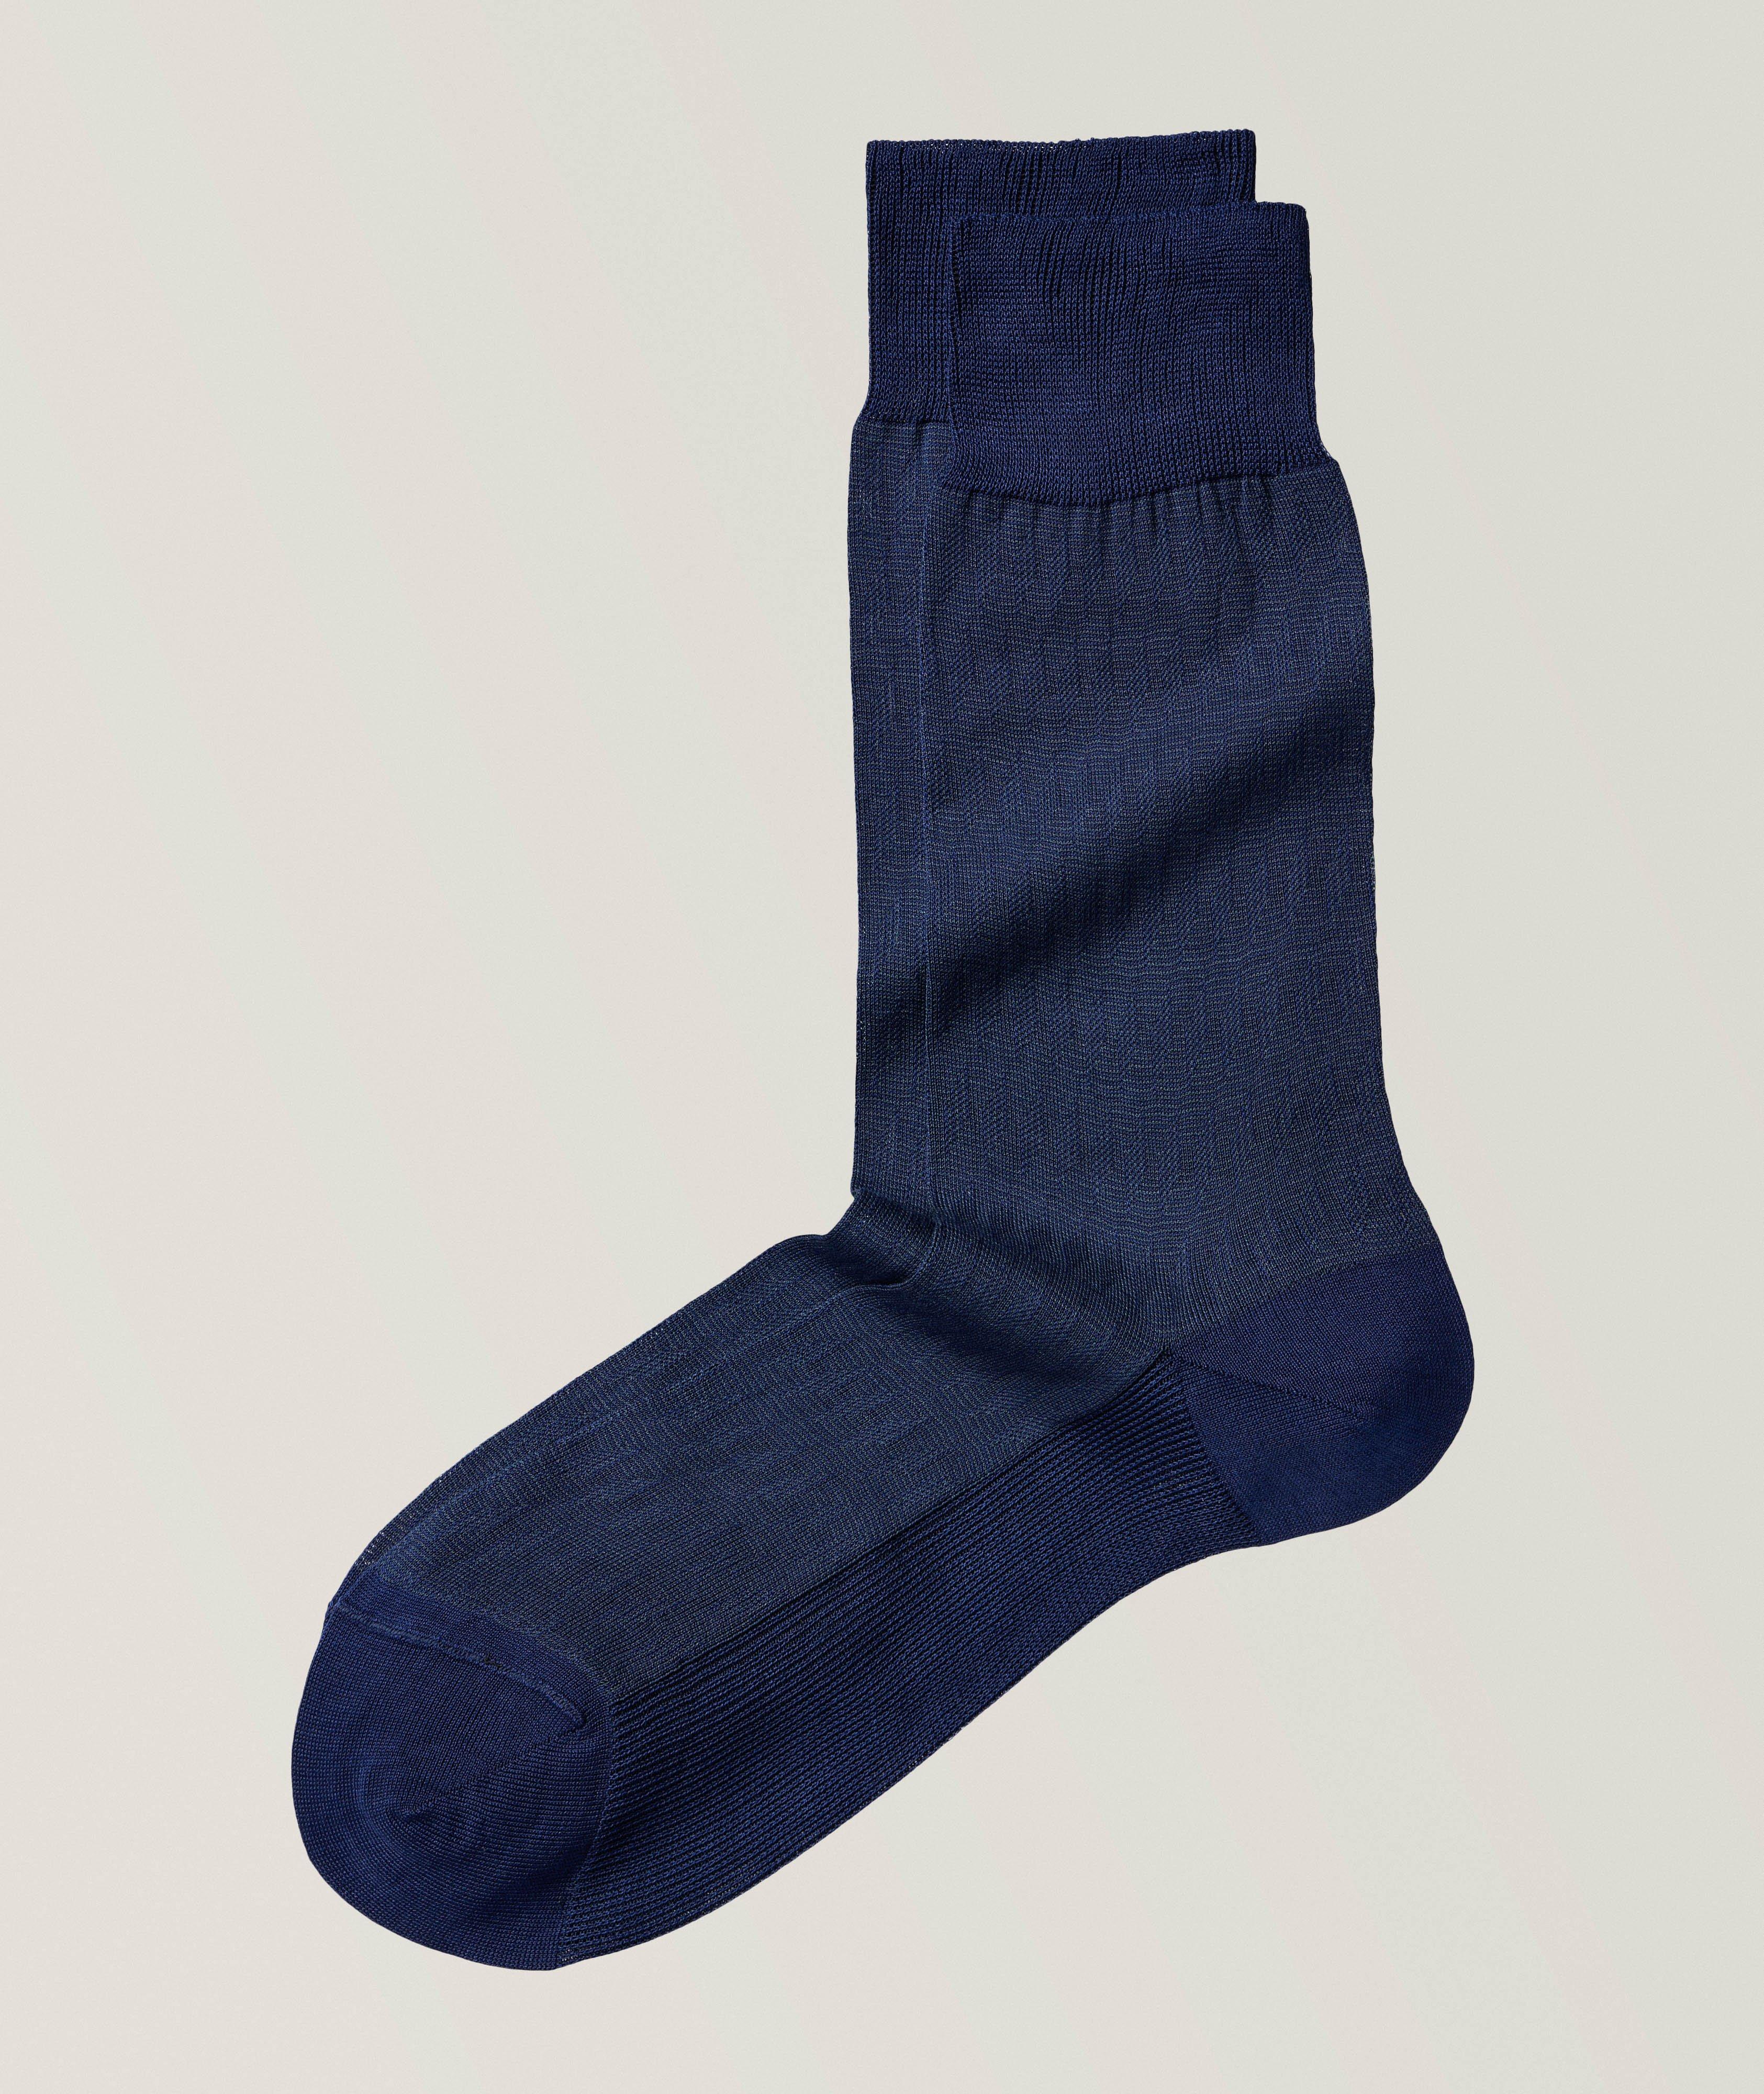 Geometric Cotton-Blend Dress Socks image 0